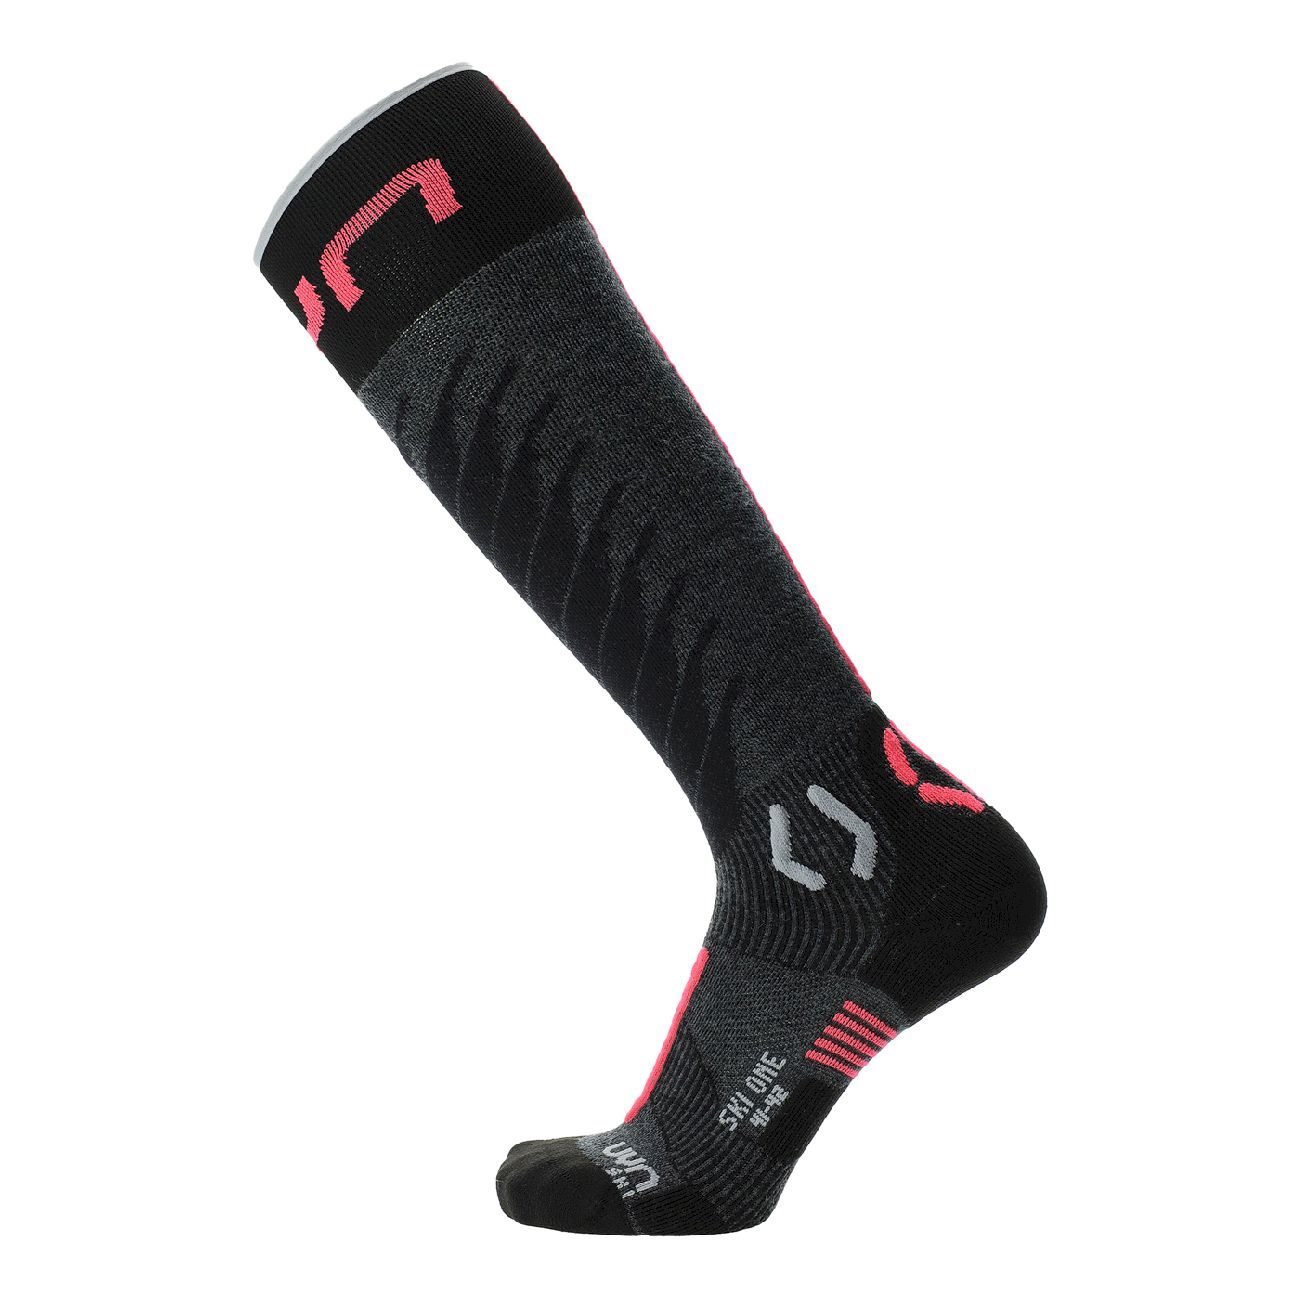 Uyn Ski One Merino Socks - Laskettelusukat - Naiset